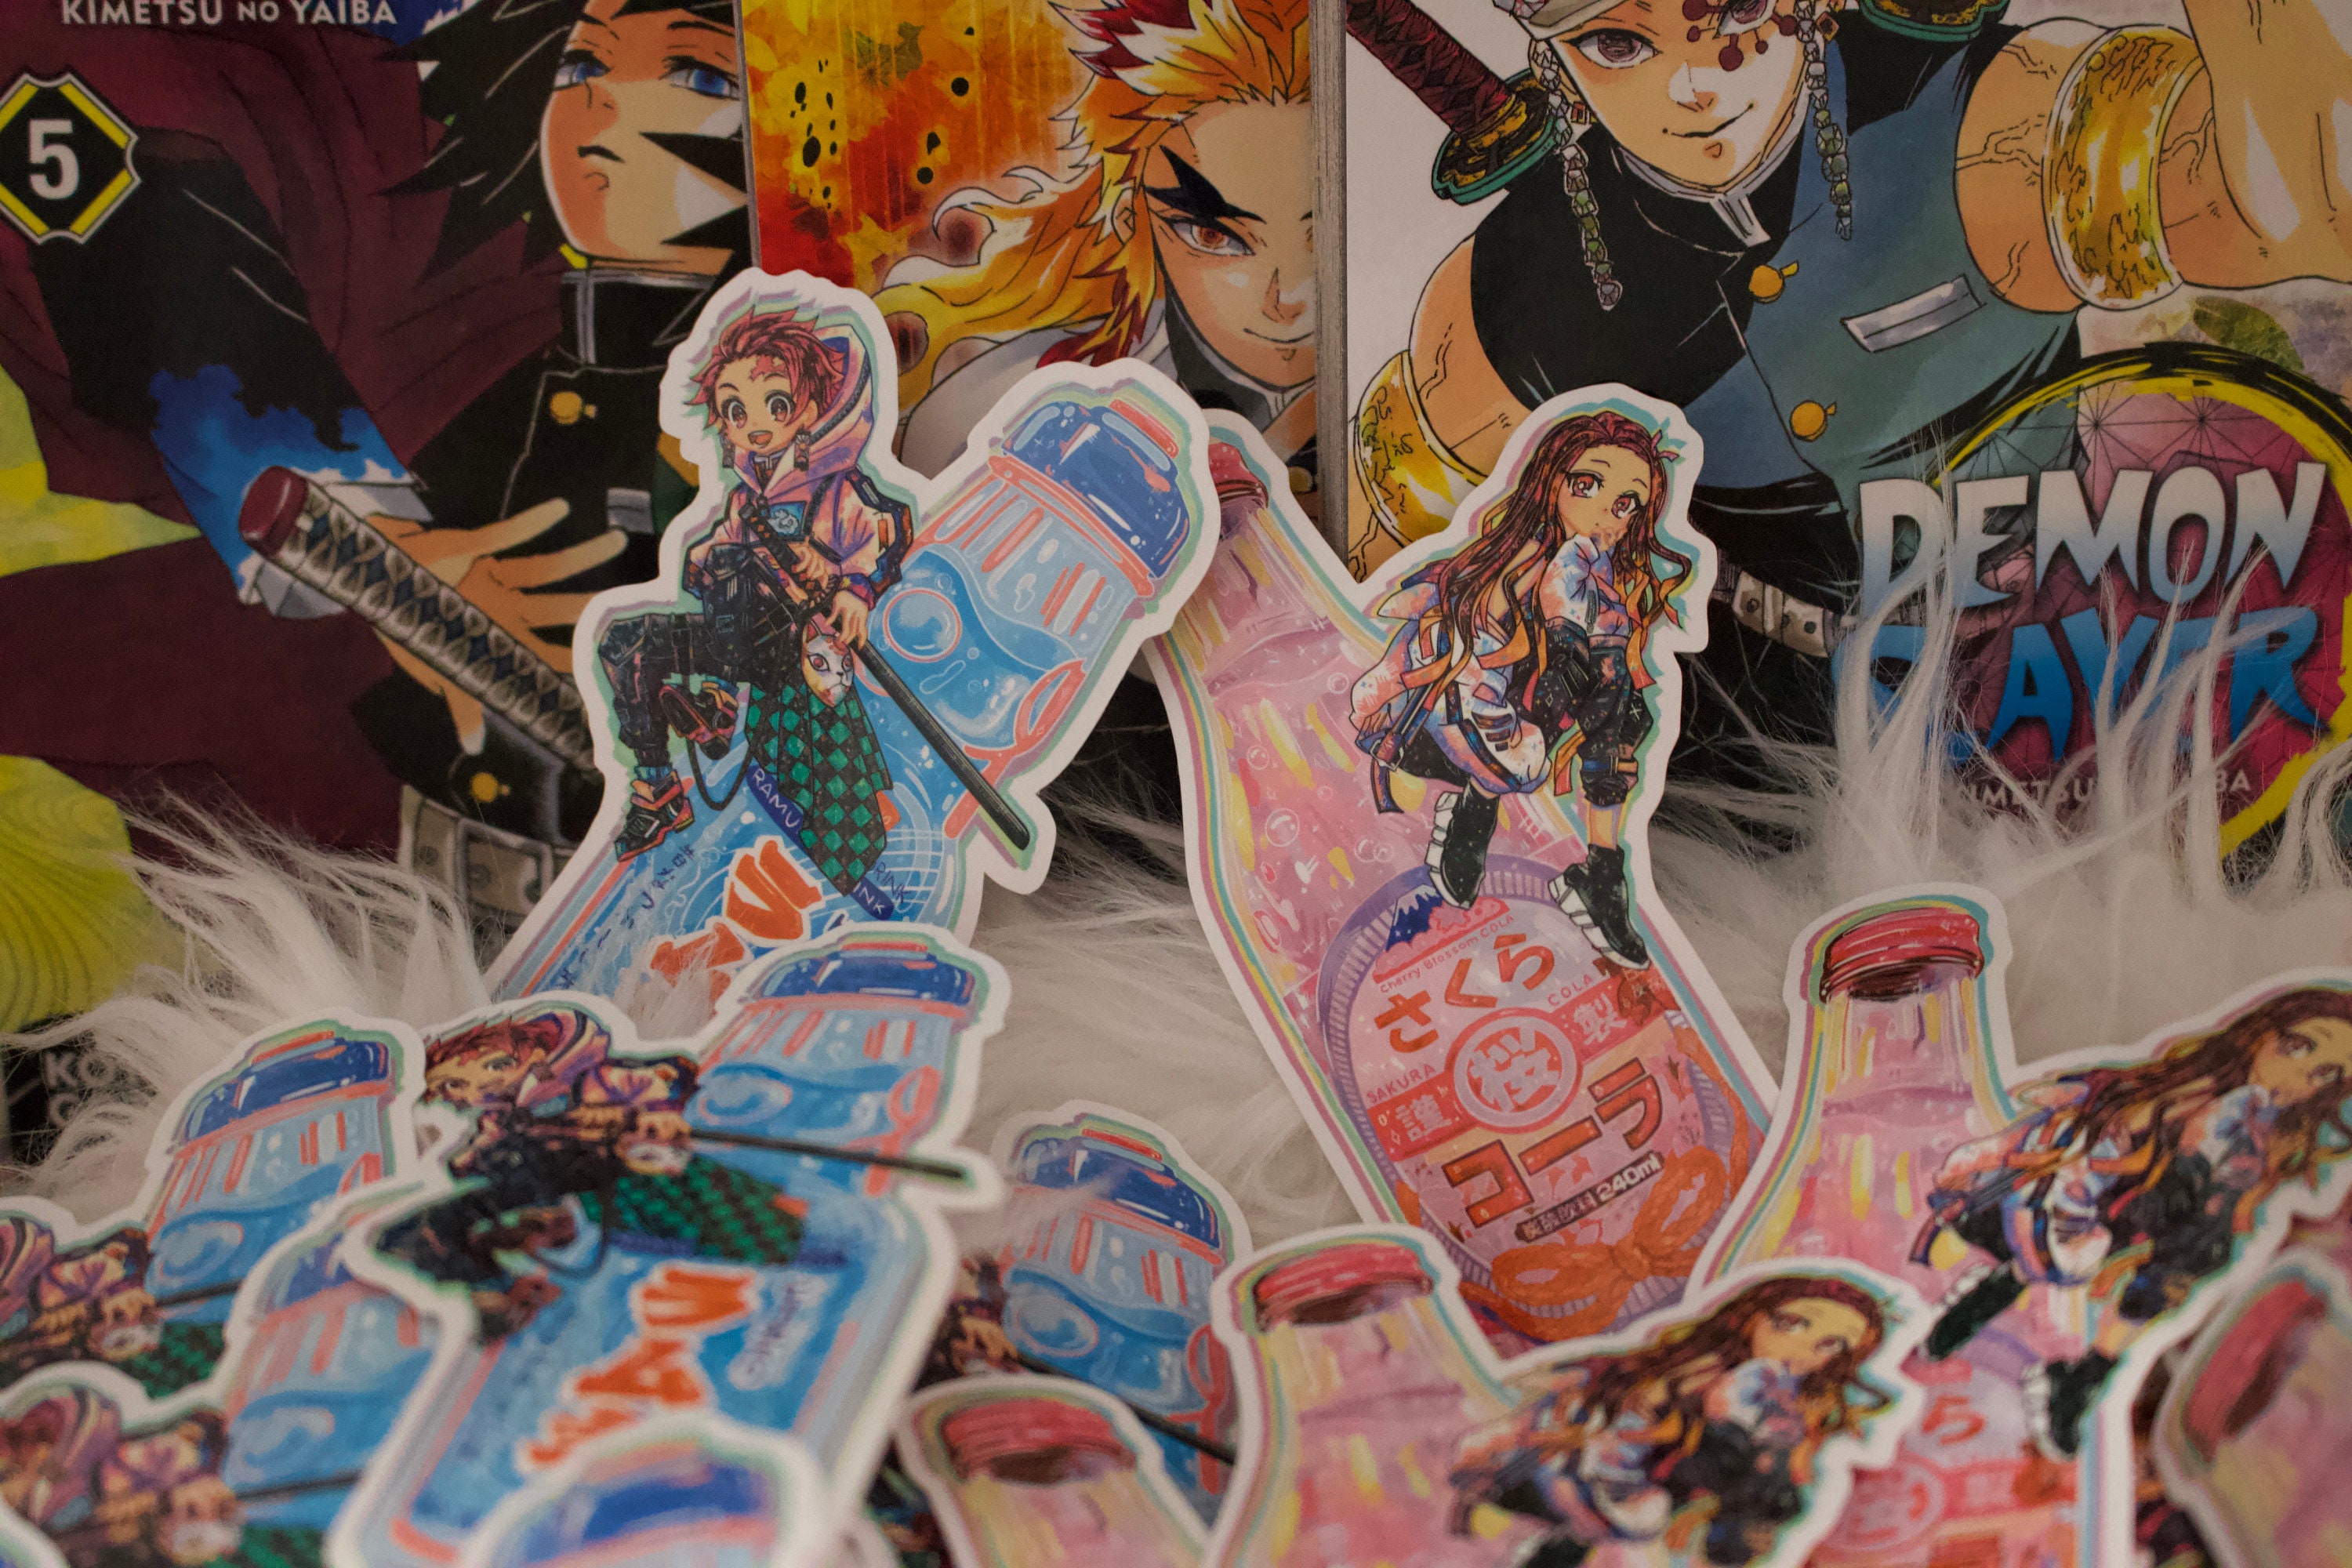 Pin de Chewy en Kimetsu no yaiba  Ilustración manga, Personajes de anime,  Dibujos de anime